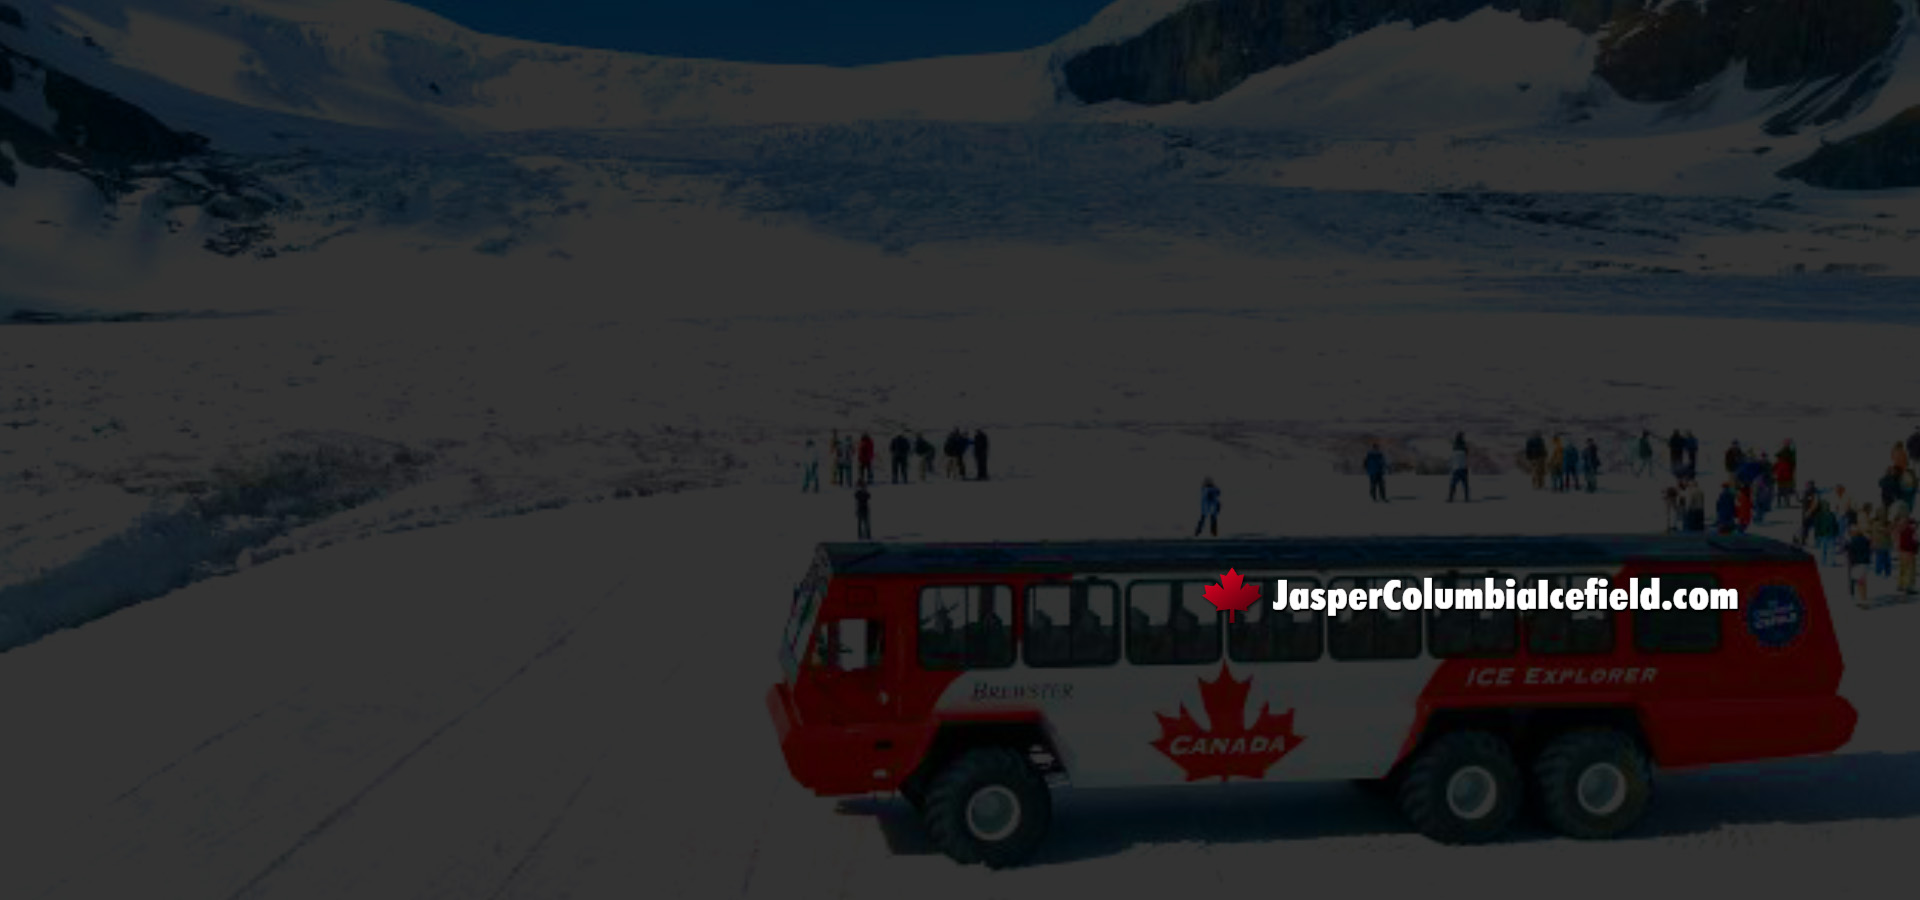 Athabasca Glacier tour - Jasper: Rates, photos & reviews